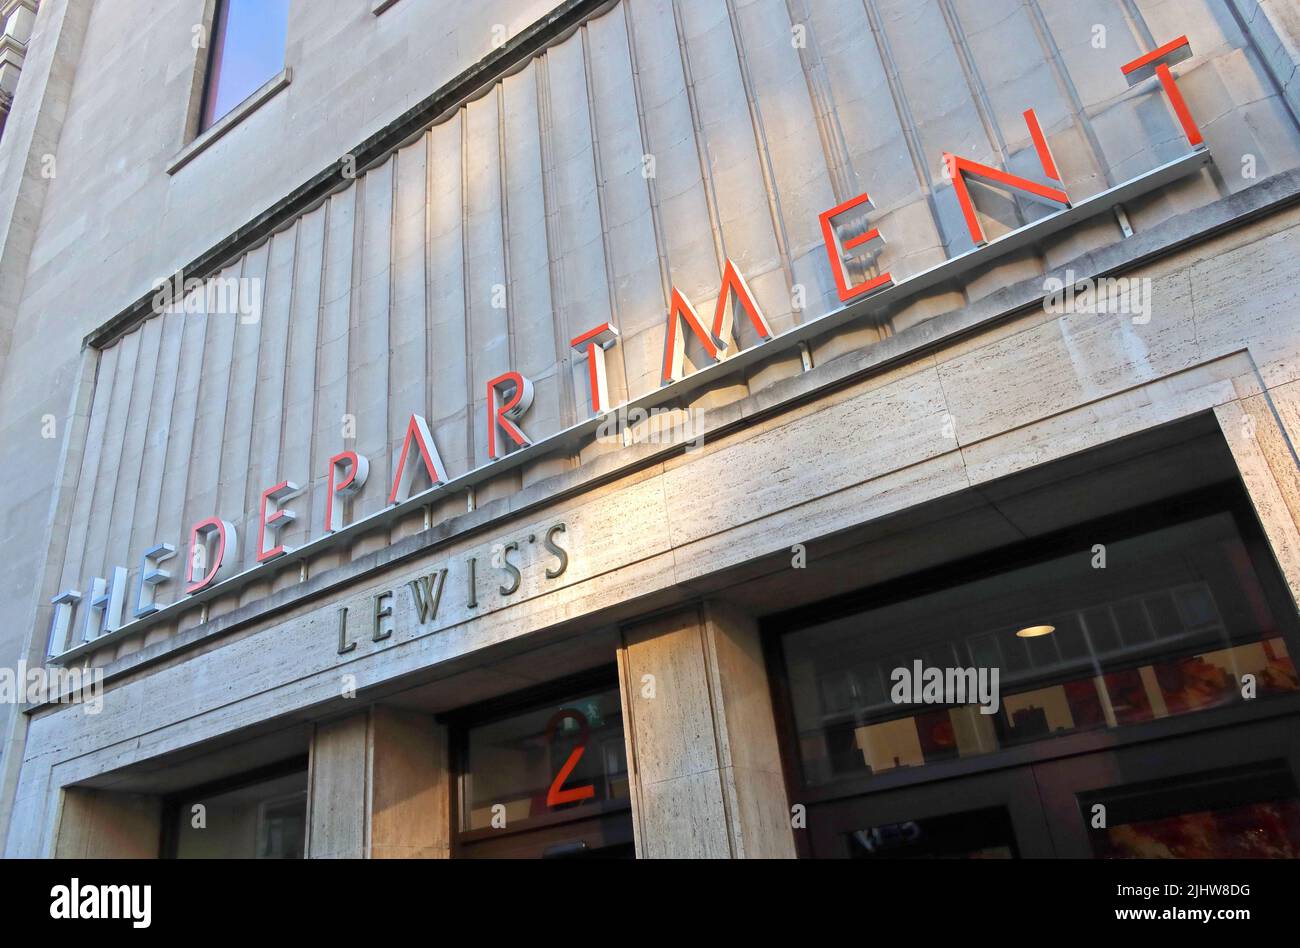 Lewiss, le légendaire magasin Lewis, Ranelagh Street, Liverpool, Merseyside, Angleterre, ROYAUME-UNI, L1 1QE Banque D'Images